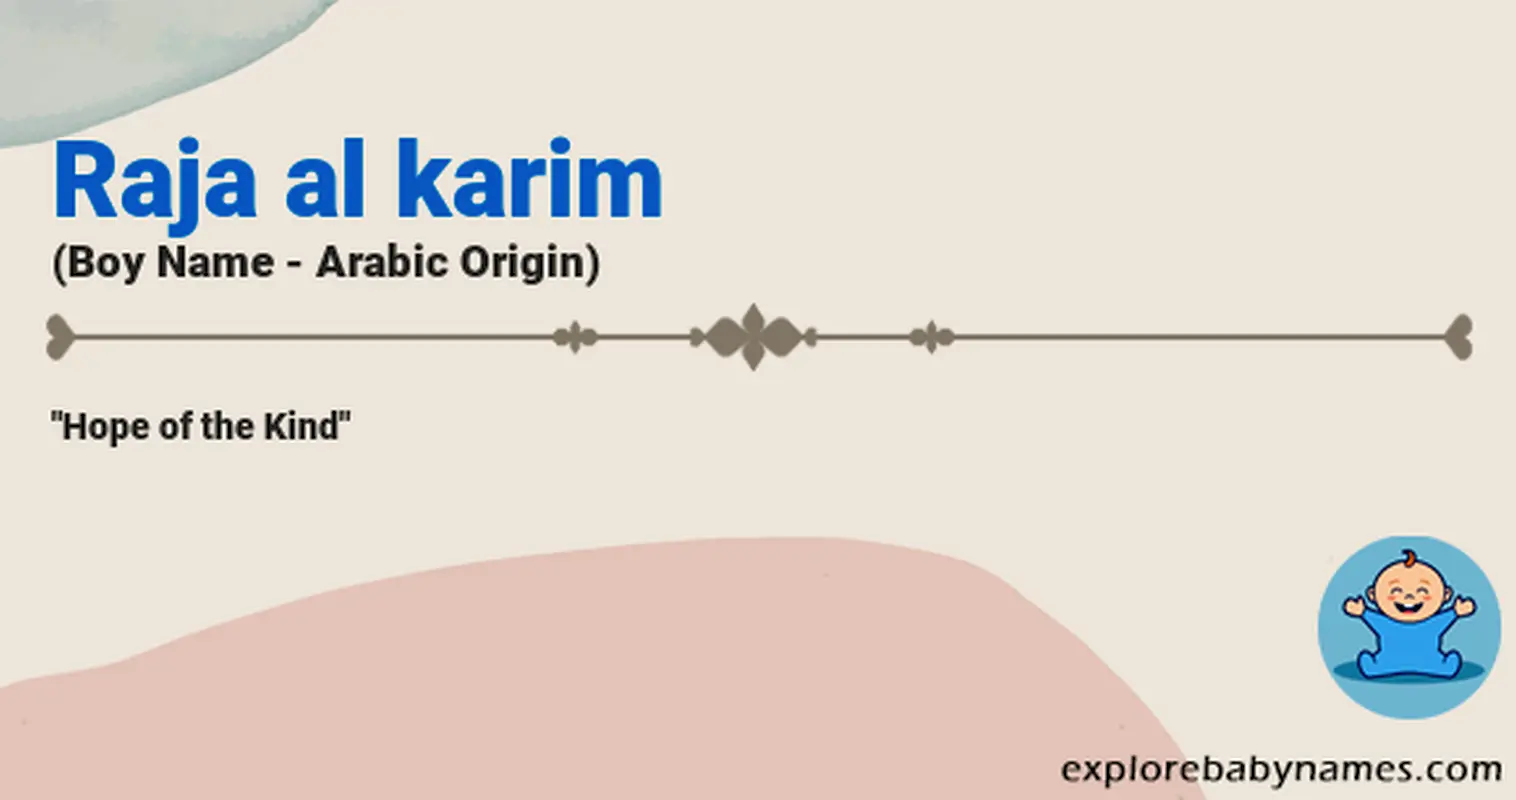 Meaning of Raja al karim